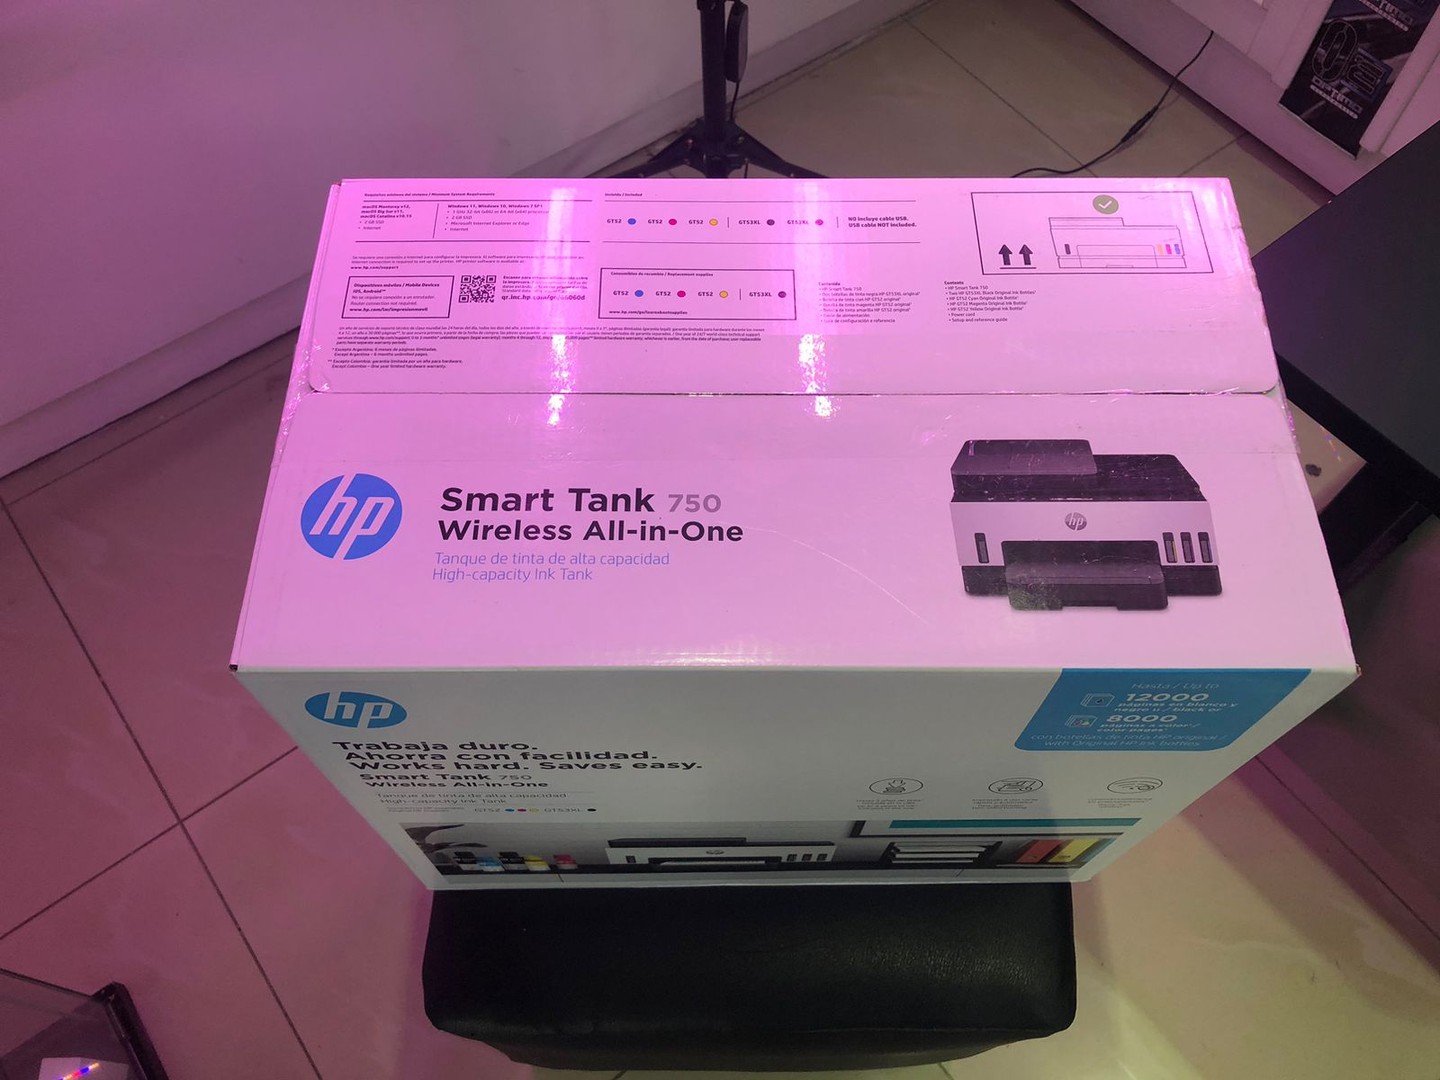 impresoras y scanners - Oferta Impresora HP Smart Tank 750 Multifuncion Inalambrica WIFi y Bluetooth 4